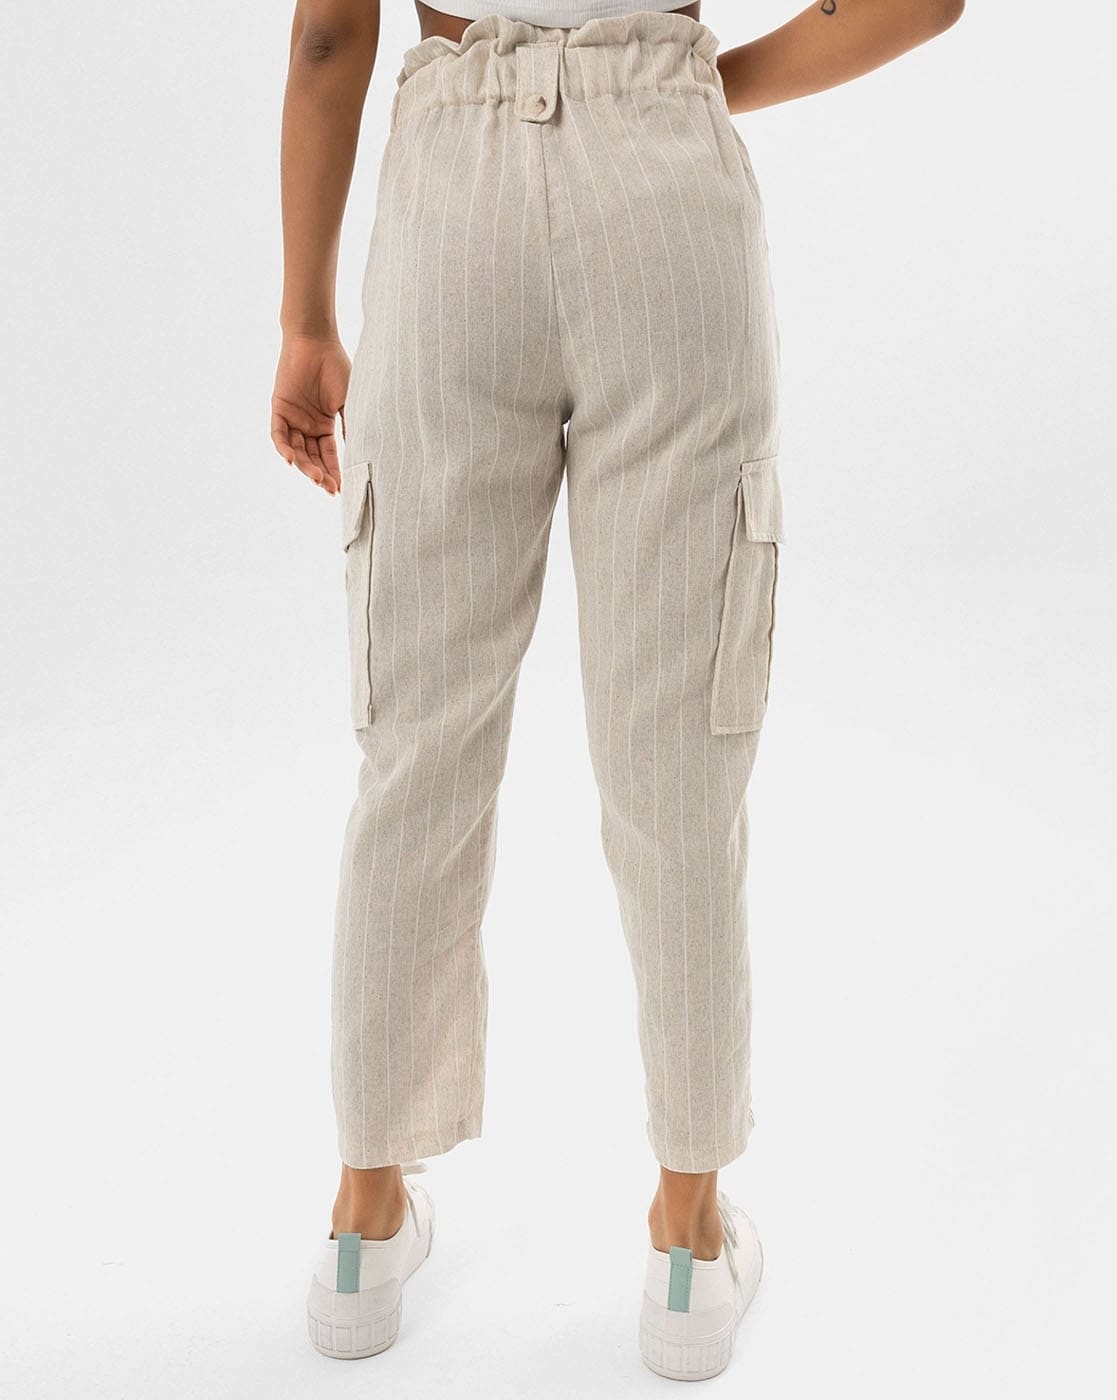 Low-waist cotton cargo pants with strap - Pants - Women